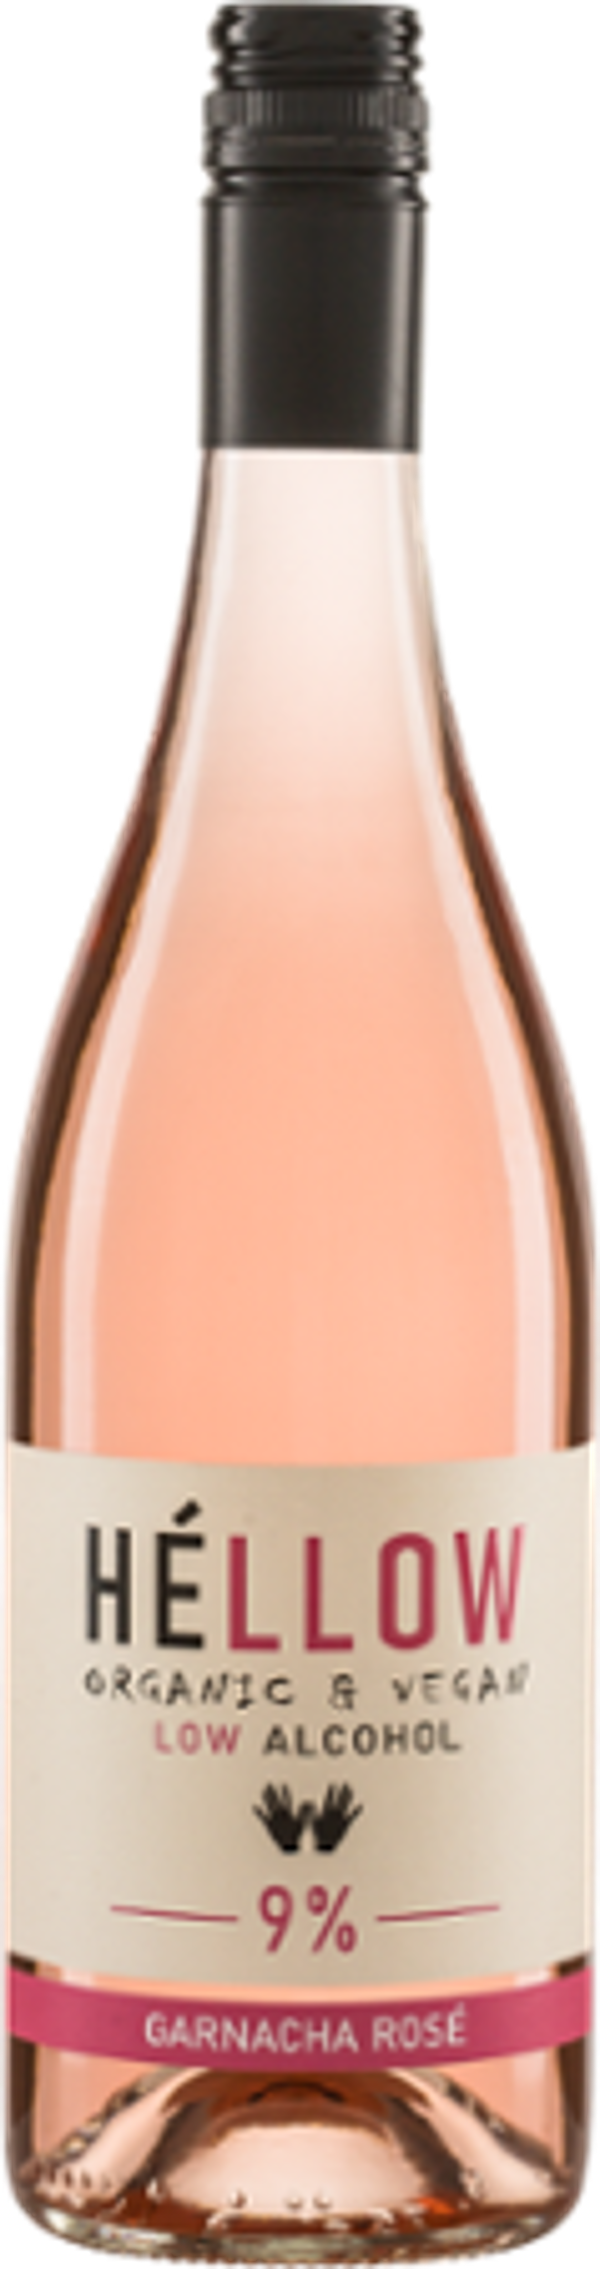 Produktfoto zu HÉLLOW Garnacha Rosé LOW ALCOHOL